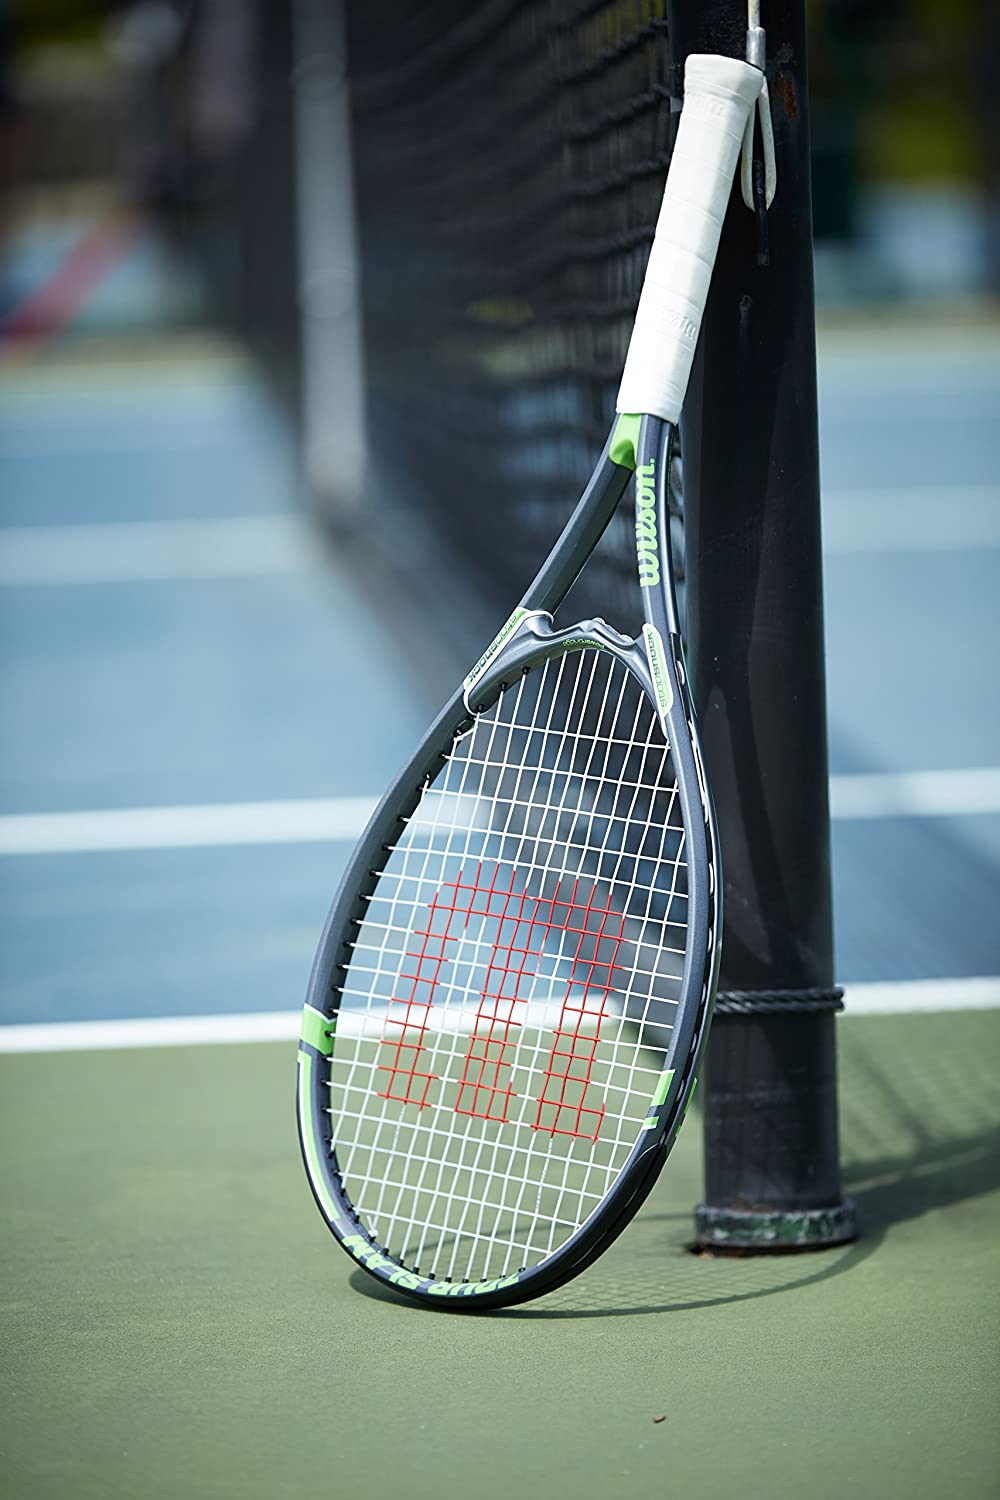 best tennis racket for beginners